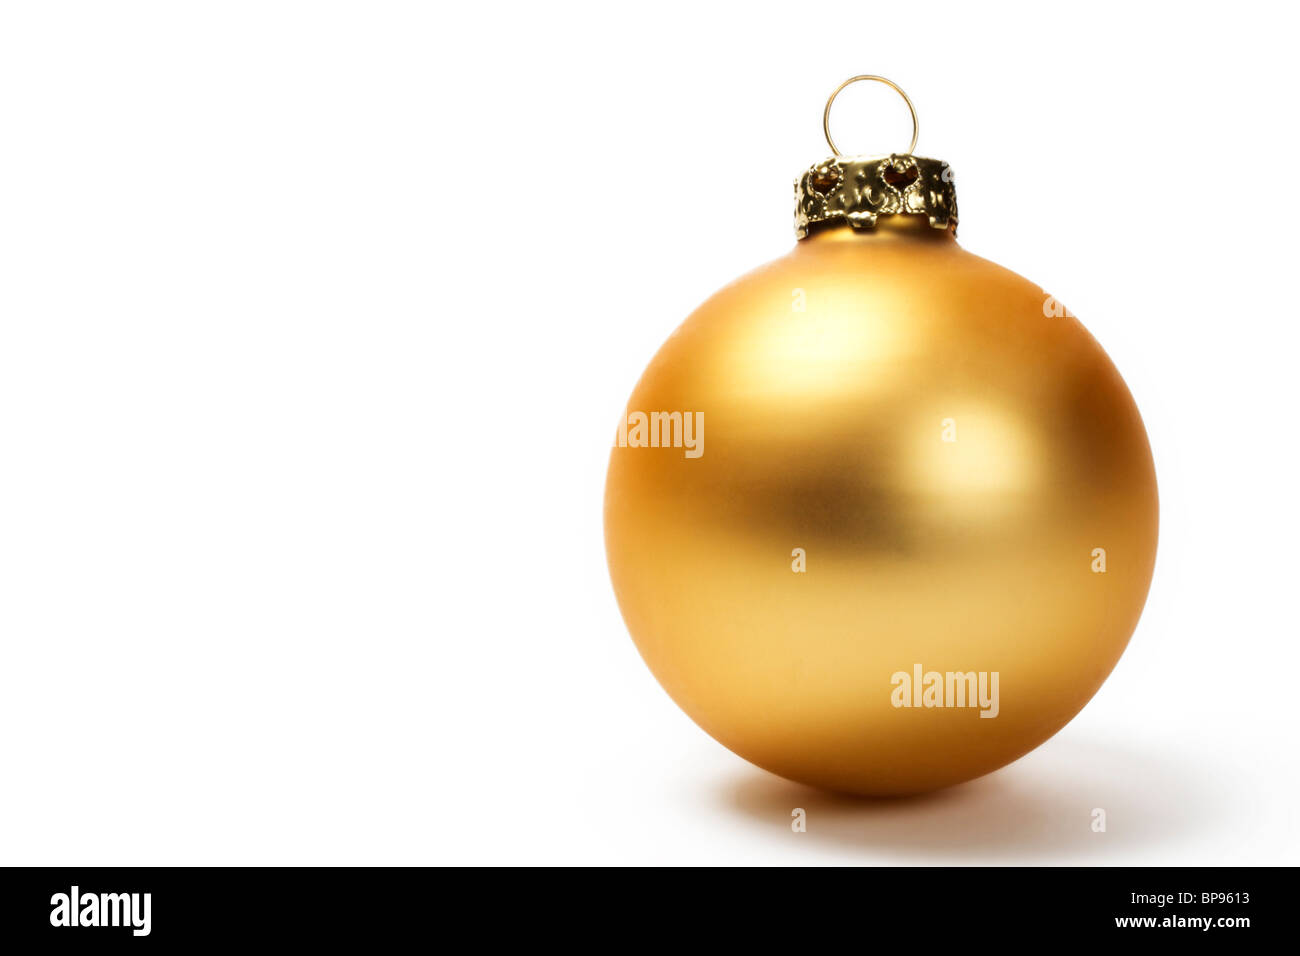 golden dull Christmas ball on white background Stock Photo